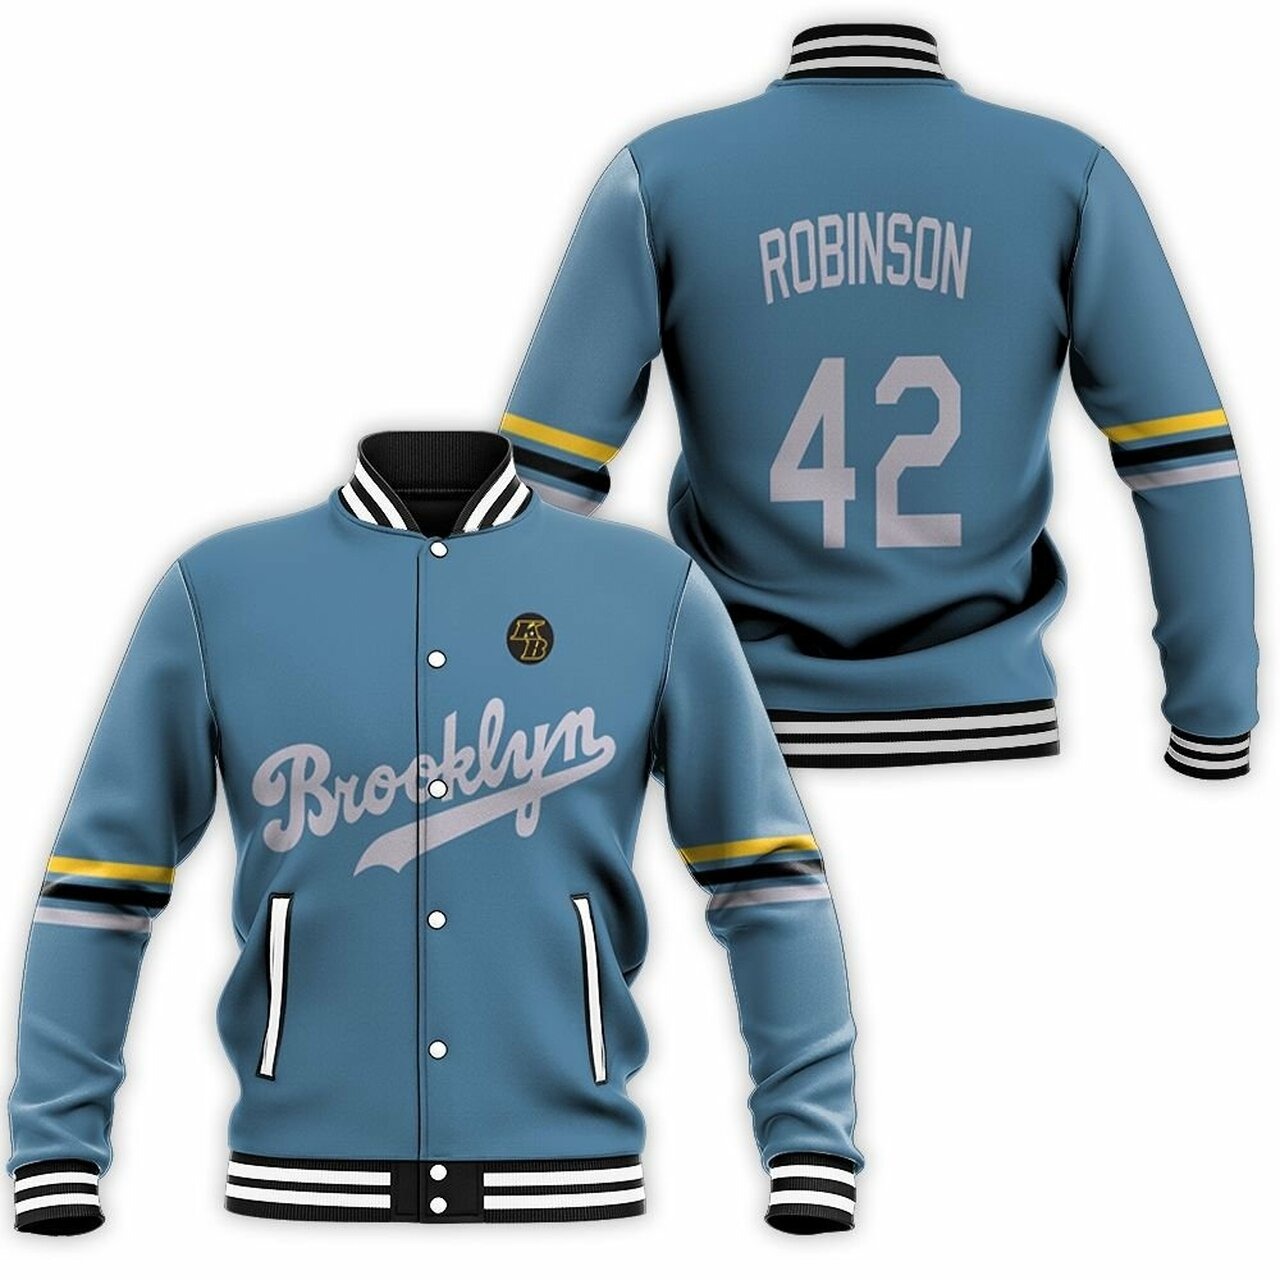 Los Angeles Dodgers Jackie Robinson 42 Mlb Baseball Jacket